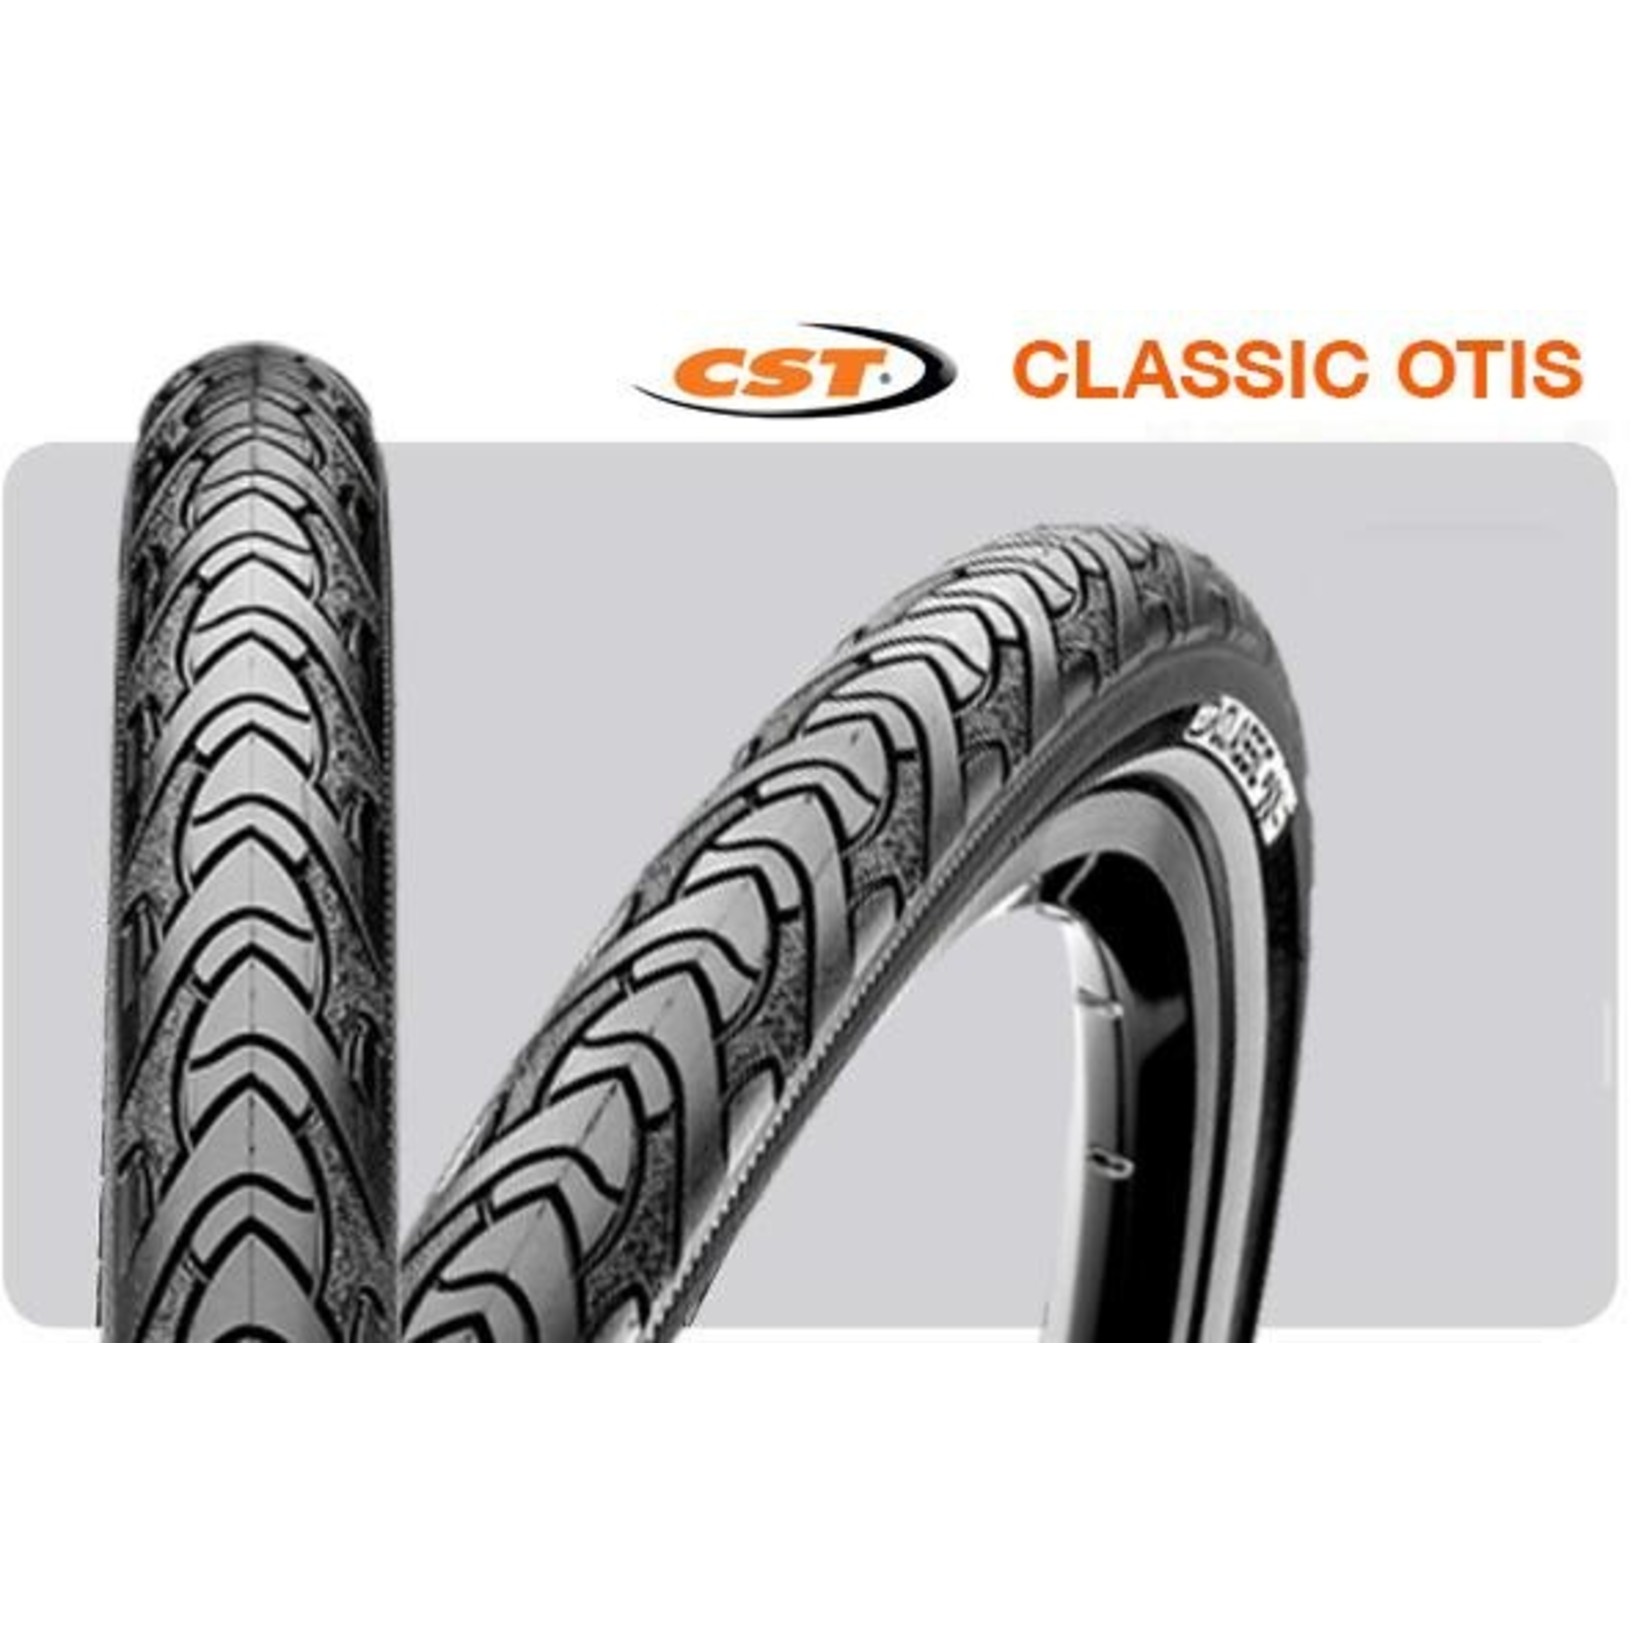 CST CST Bike Tyre 700 X 35 Hybrid - Classic Otis C177 - Puncture Resistant 3mm - Pair